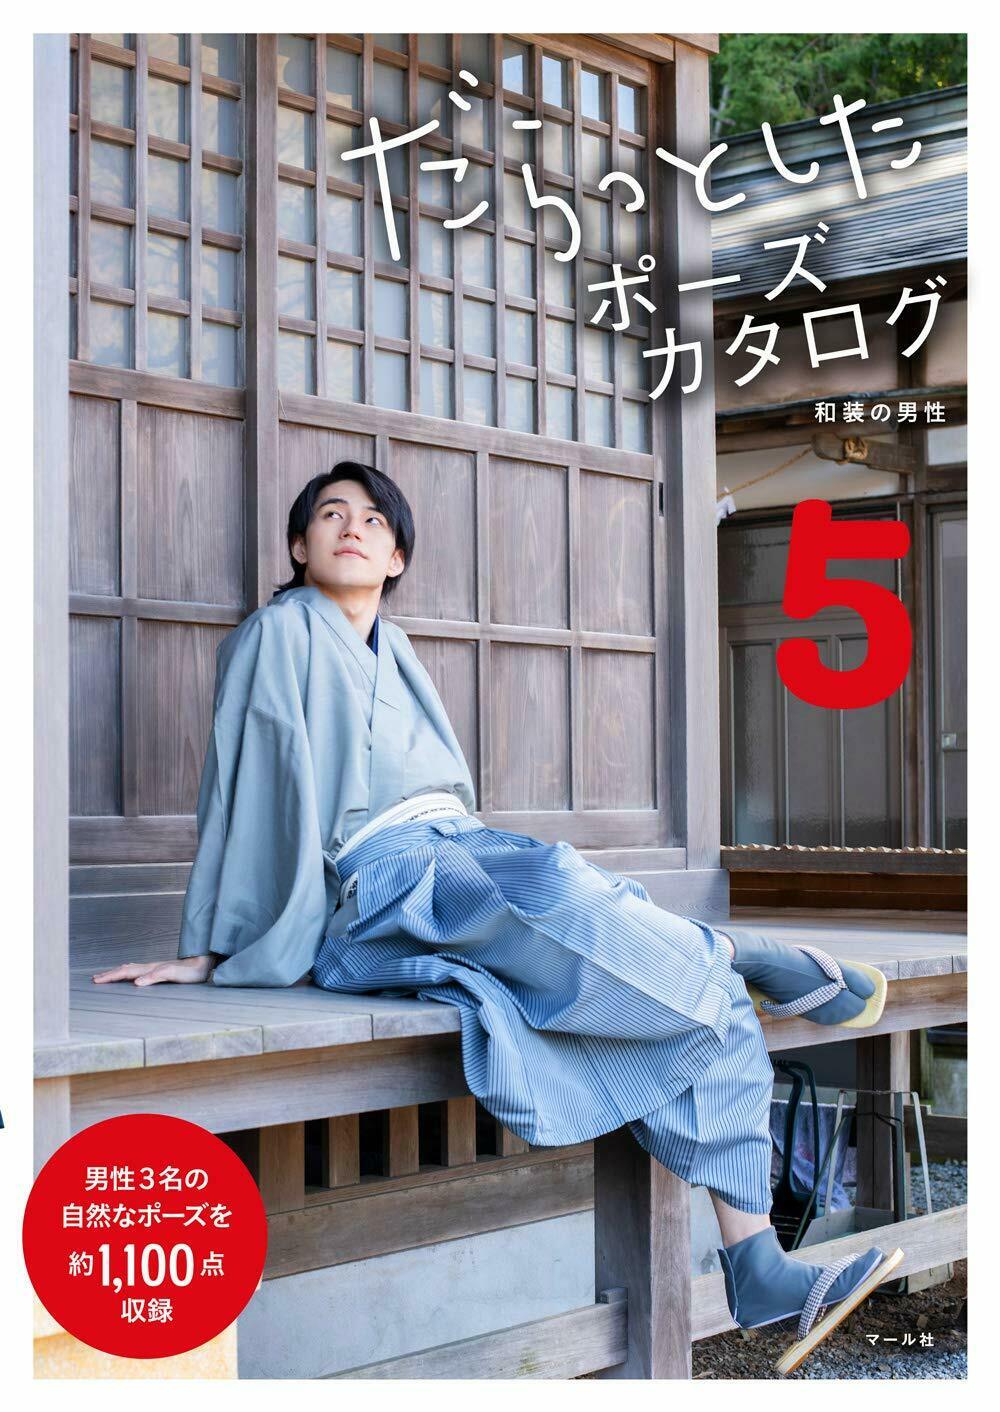 NEW' How To Draw Manga Relax Pose Book 5 Male Wasou | JAPAN Art Material Kimono